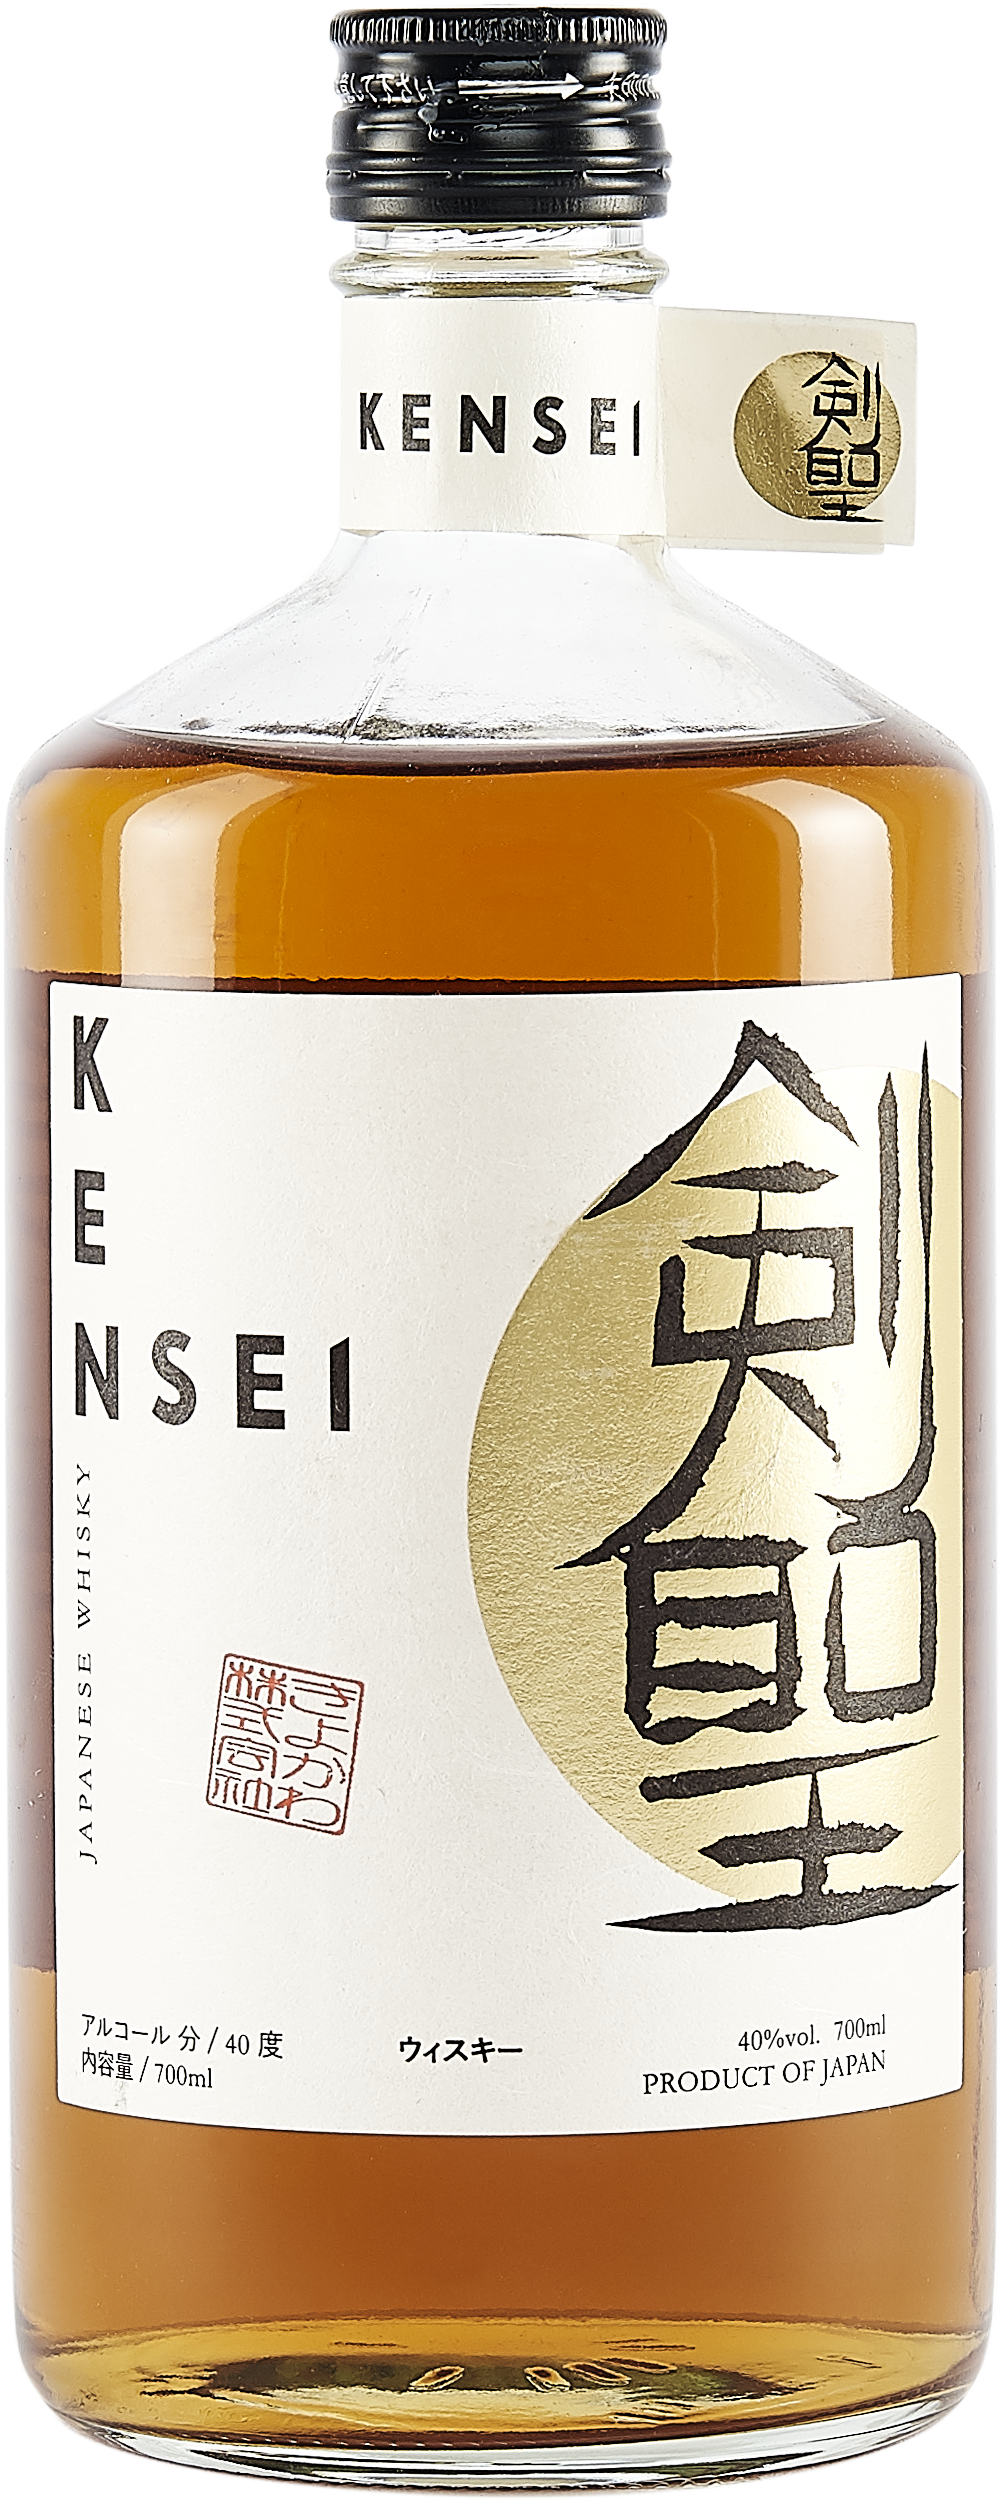 Kensei Whisky - Japan